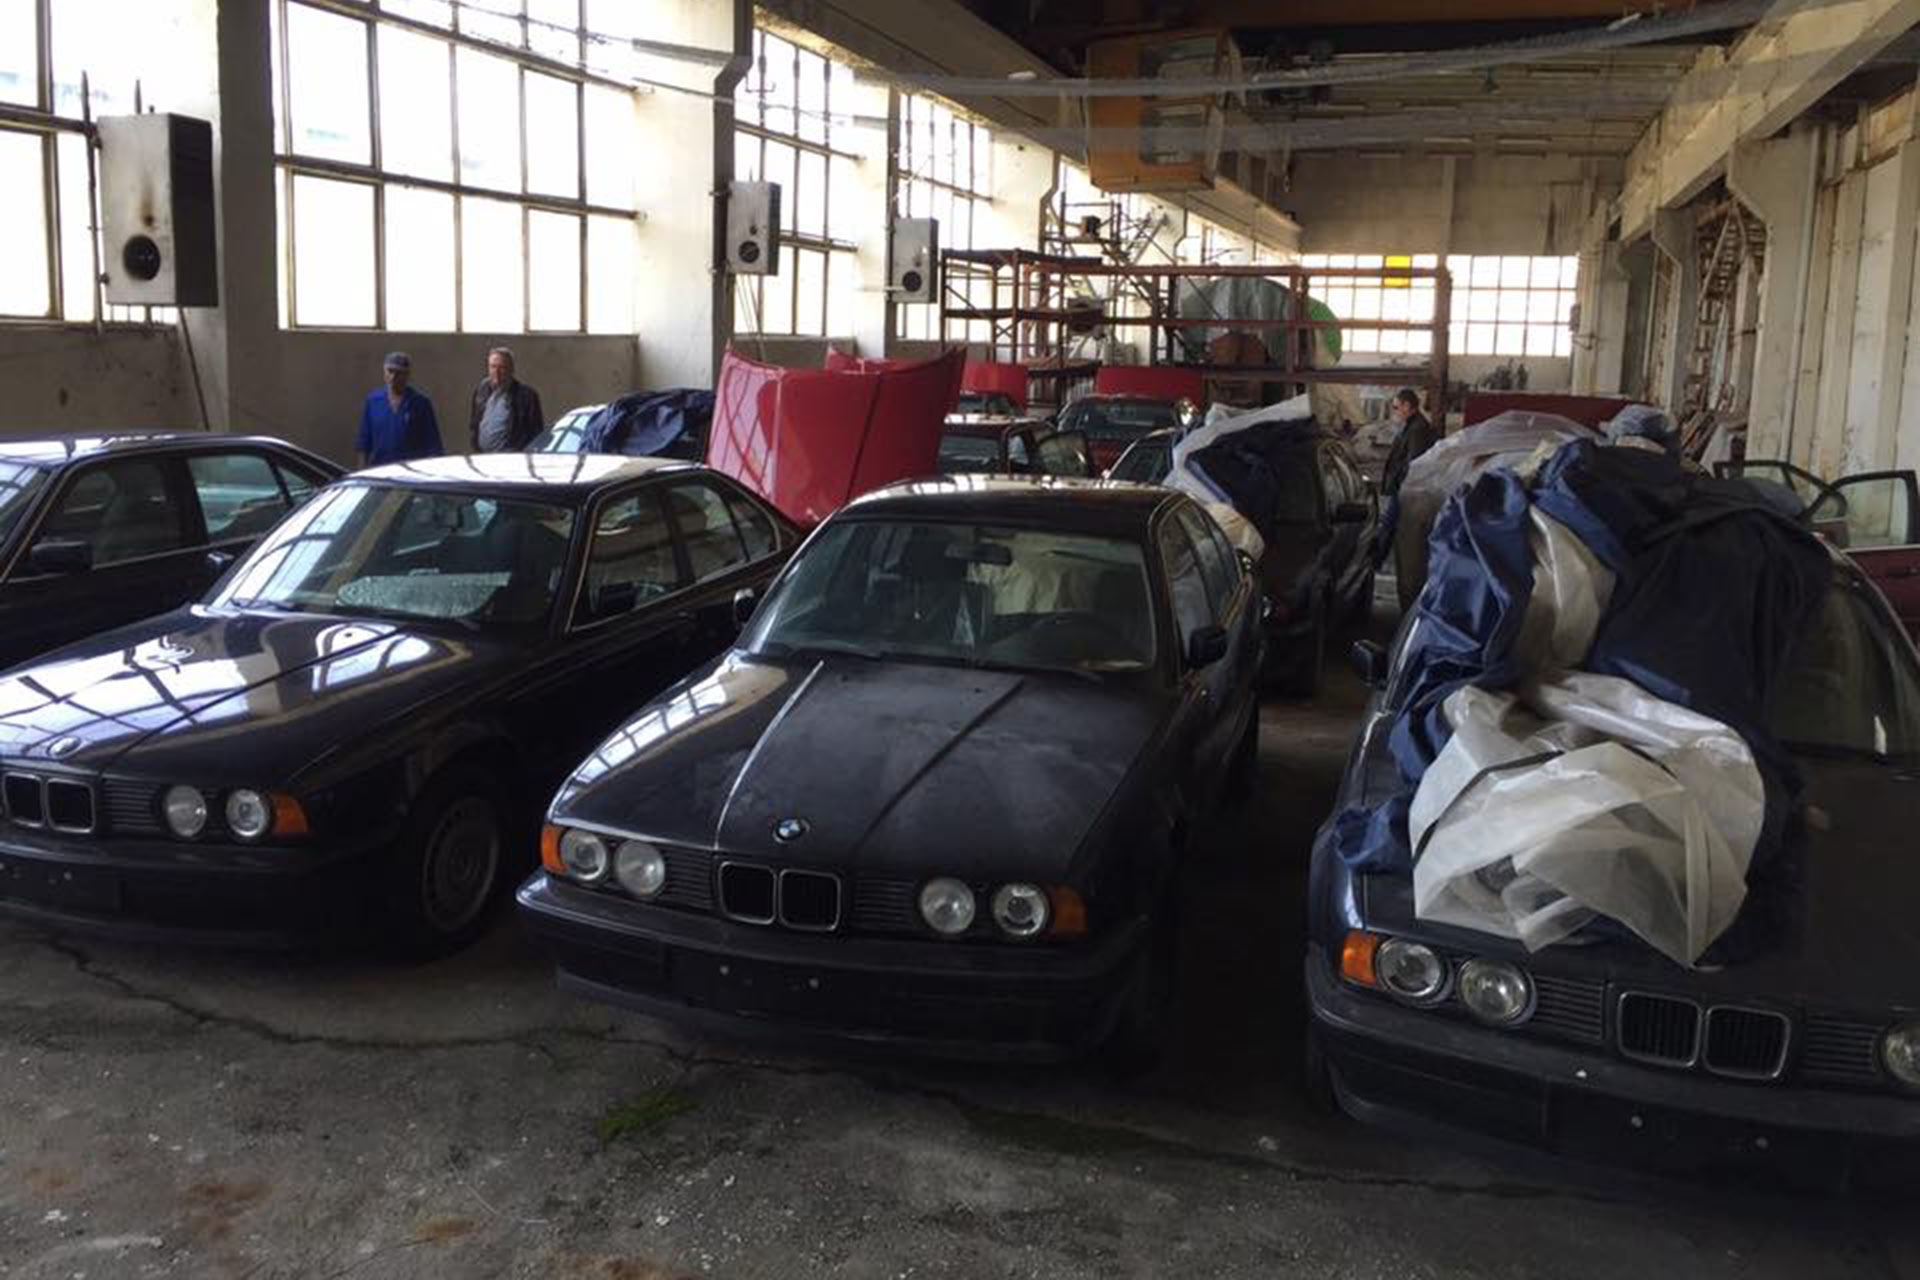 Abandoned zero mileage BMWs found in Bulgarian warehouse